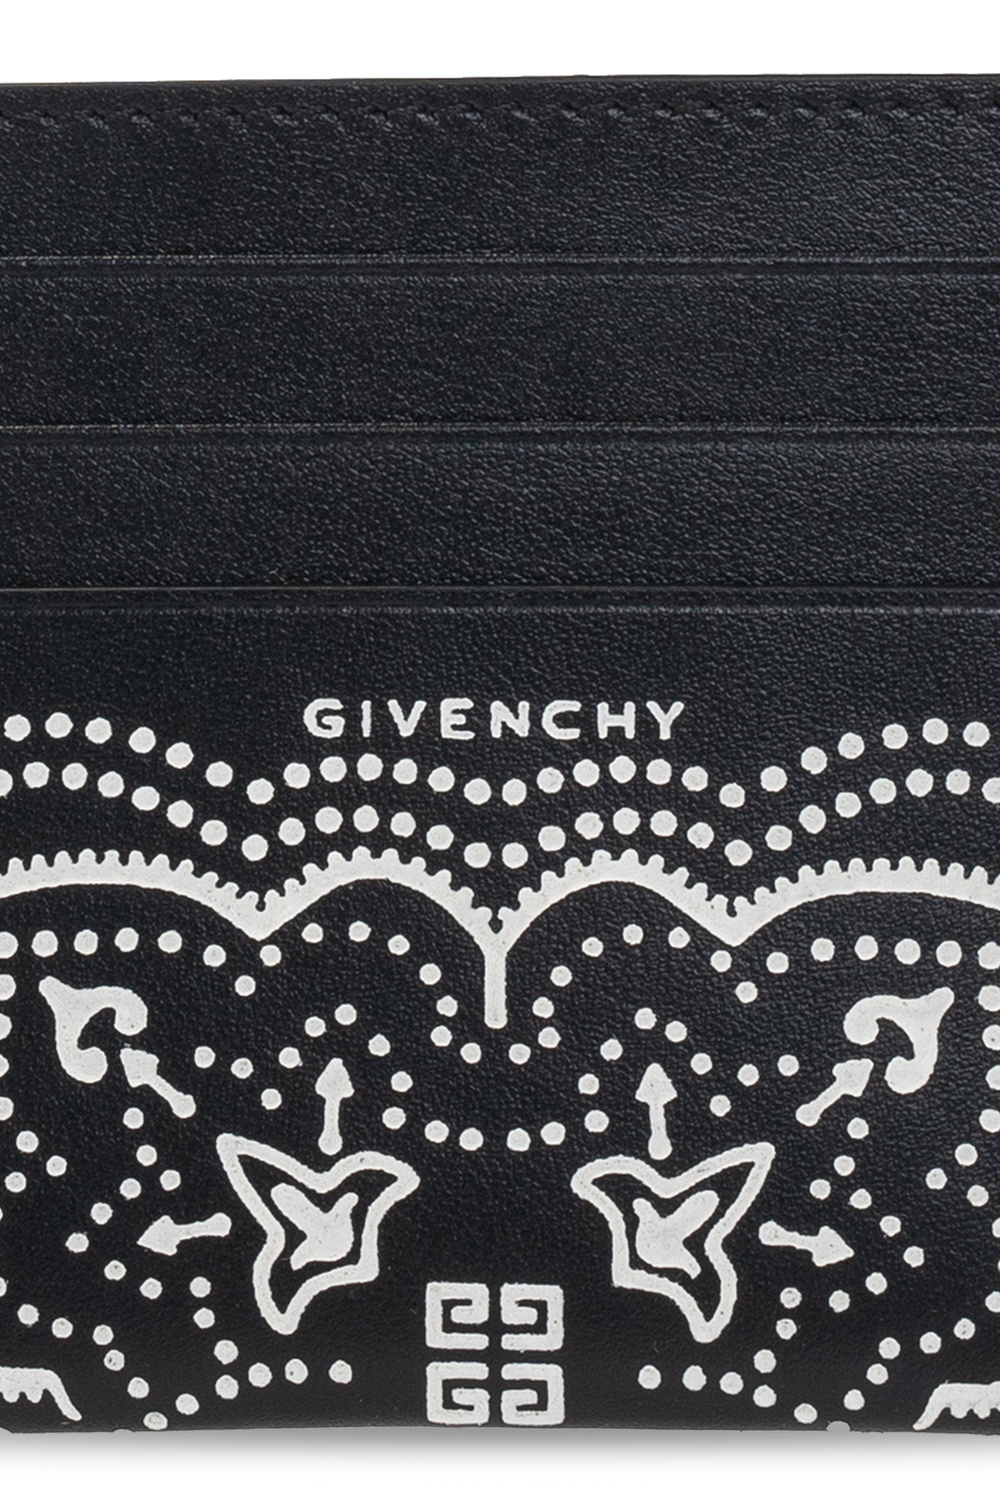 Givenchy Подарочный набор givenchy